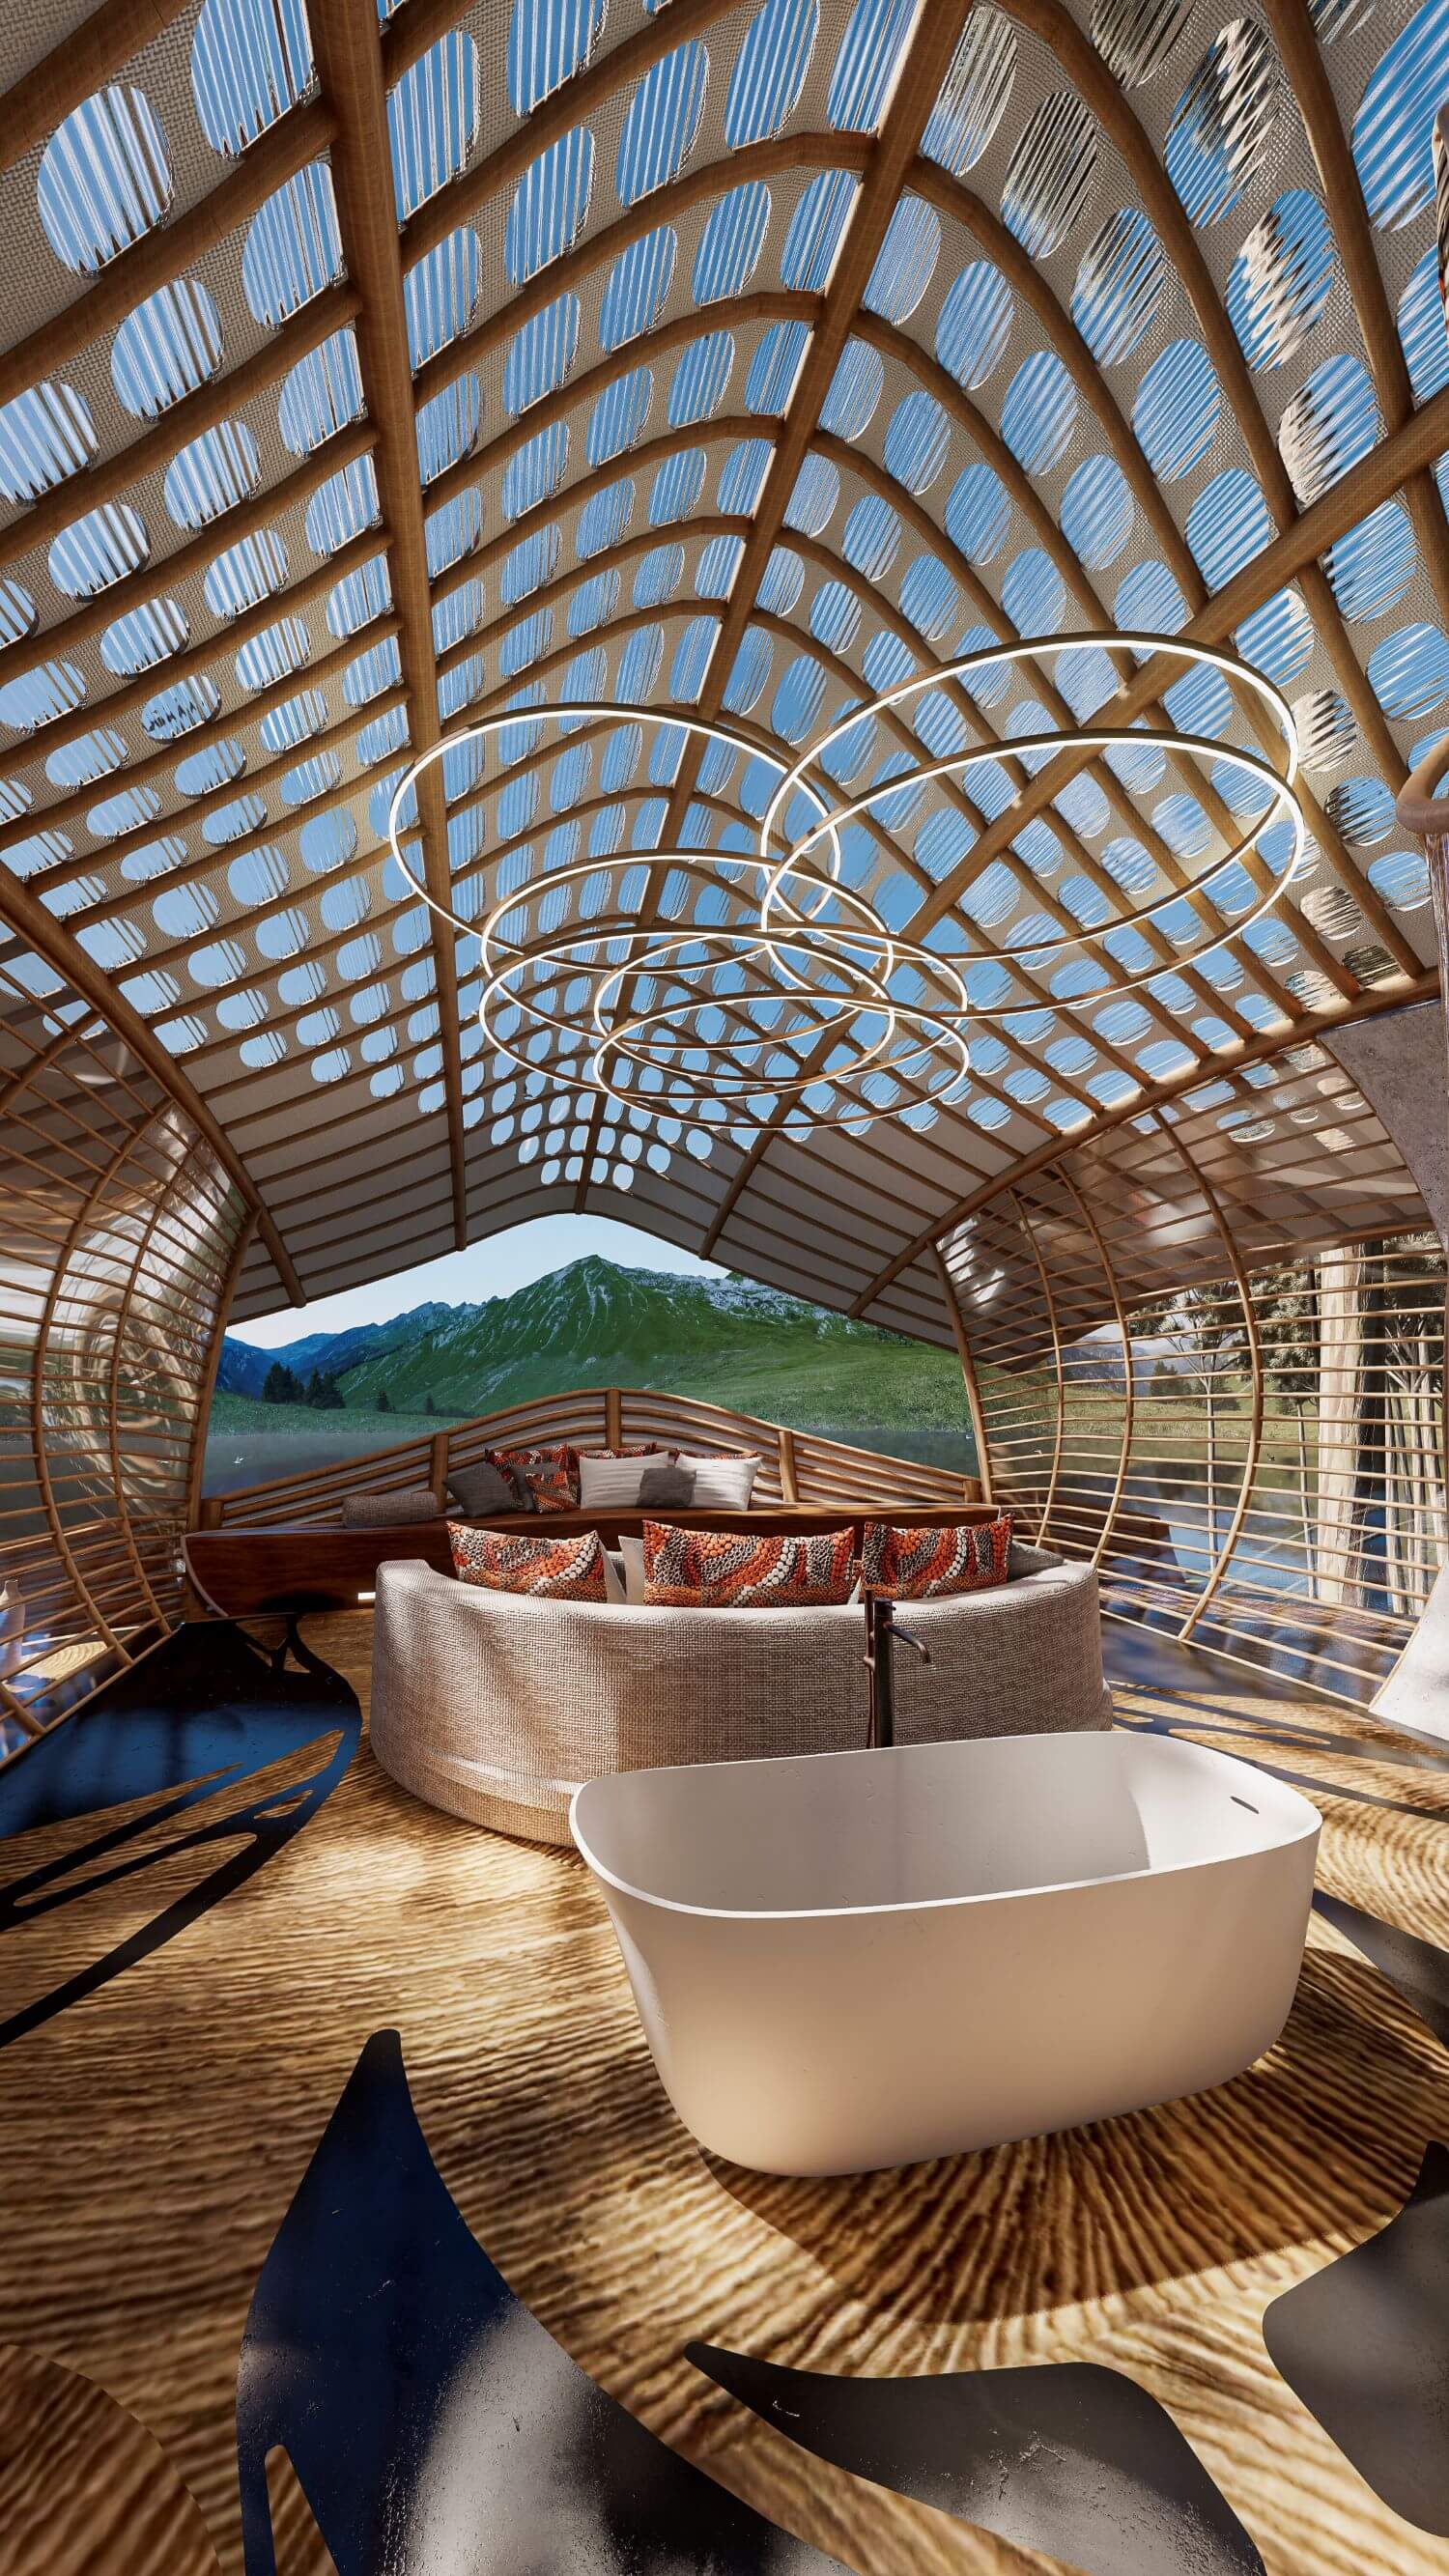 Unique Hotel in Mexico 'Seed Cabin' by Veliz Arquitecto